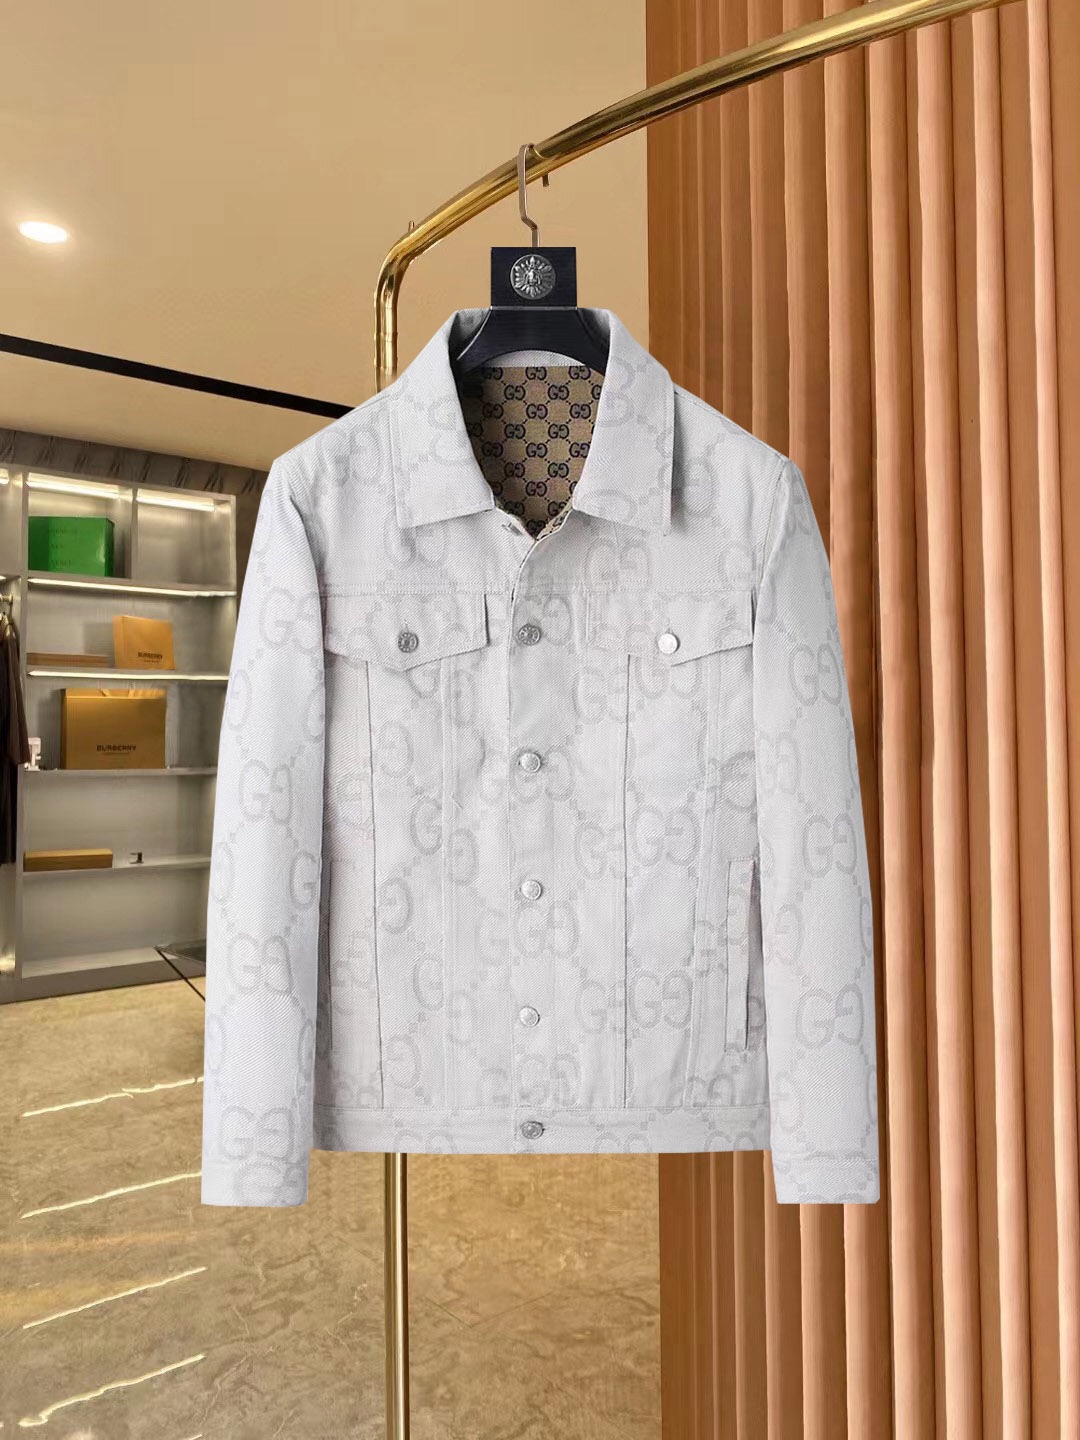 Gucci Clothing Coats & Jackets Printing Fall/Winter Collection Fashion